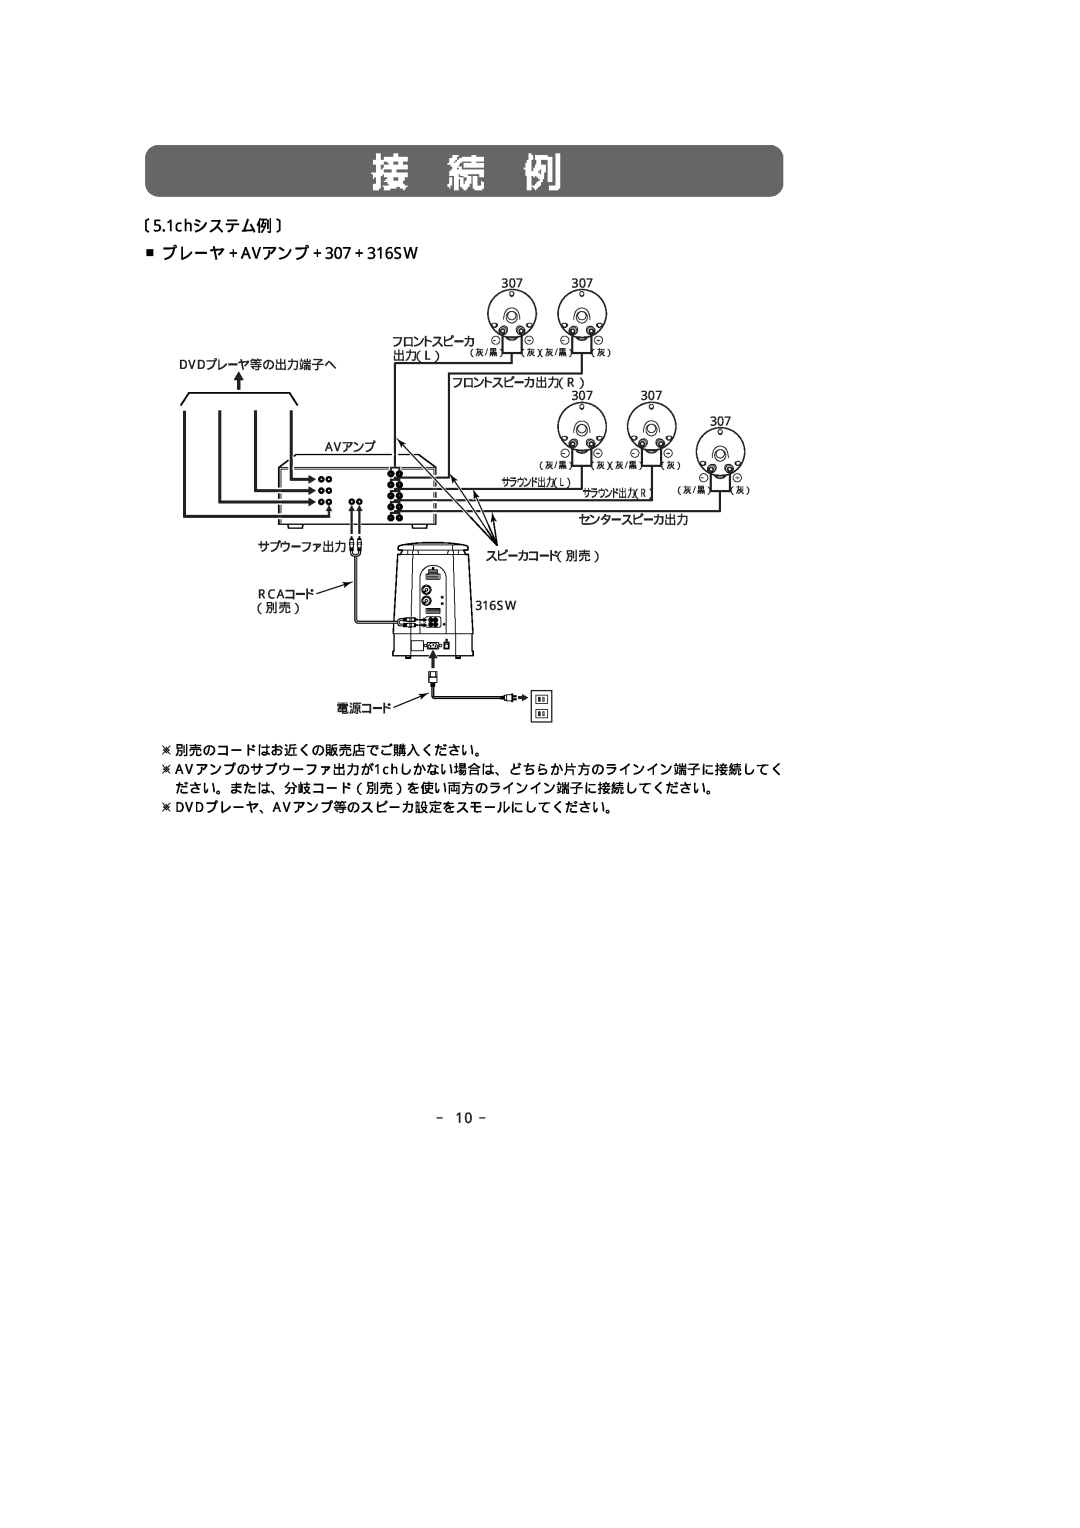 Fujitsu manual 〔5.1chシステム例〕, プレーヤ＋AVアンプ＋307＋316SW, － 10 － 